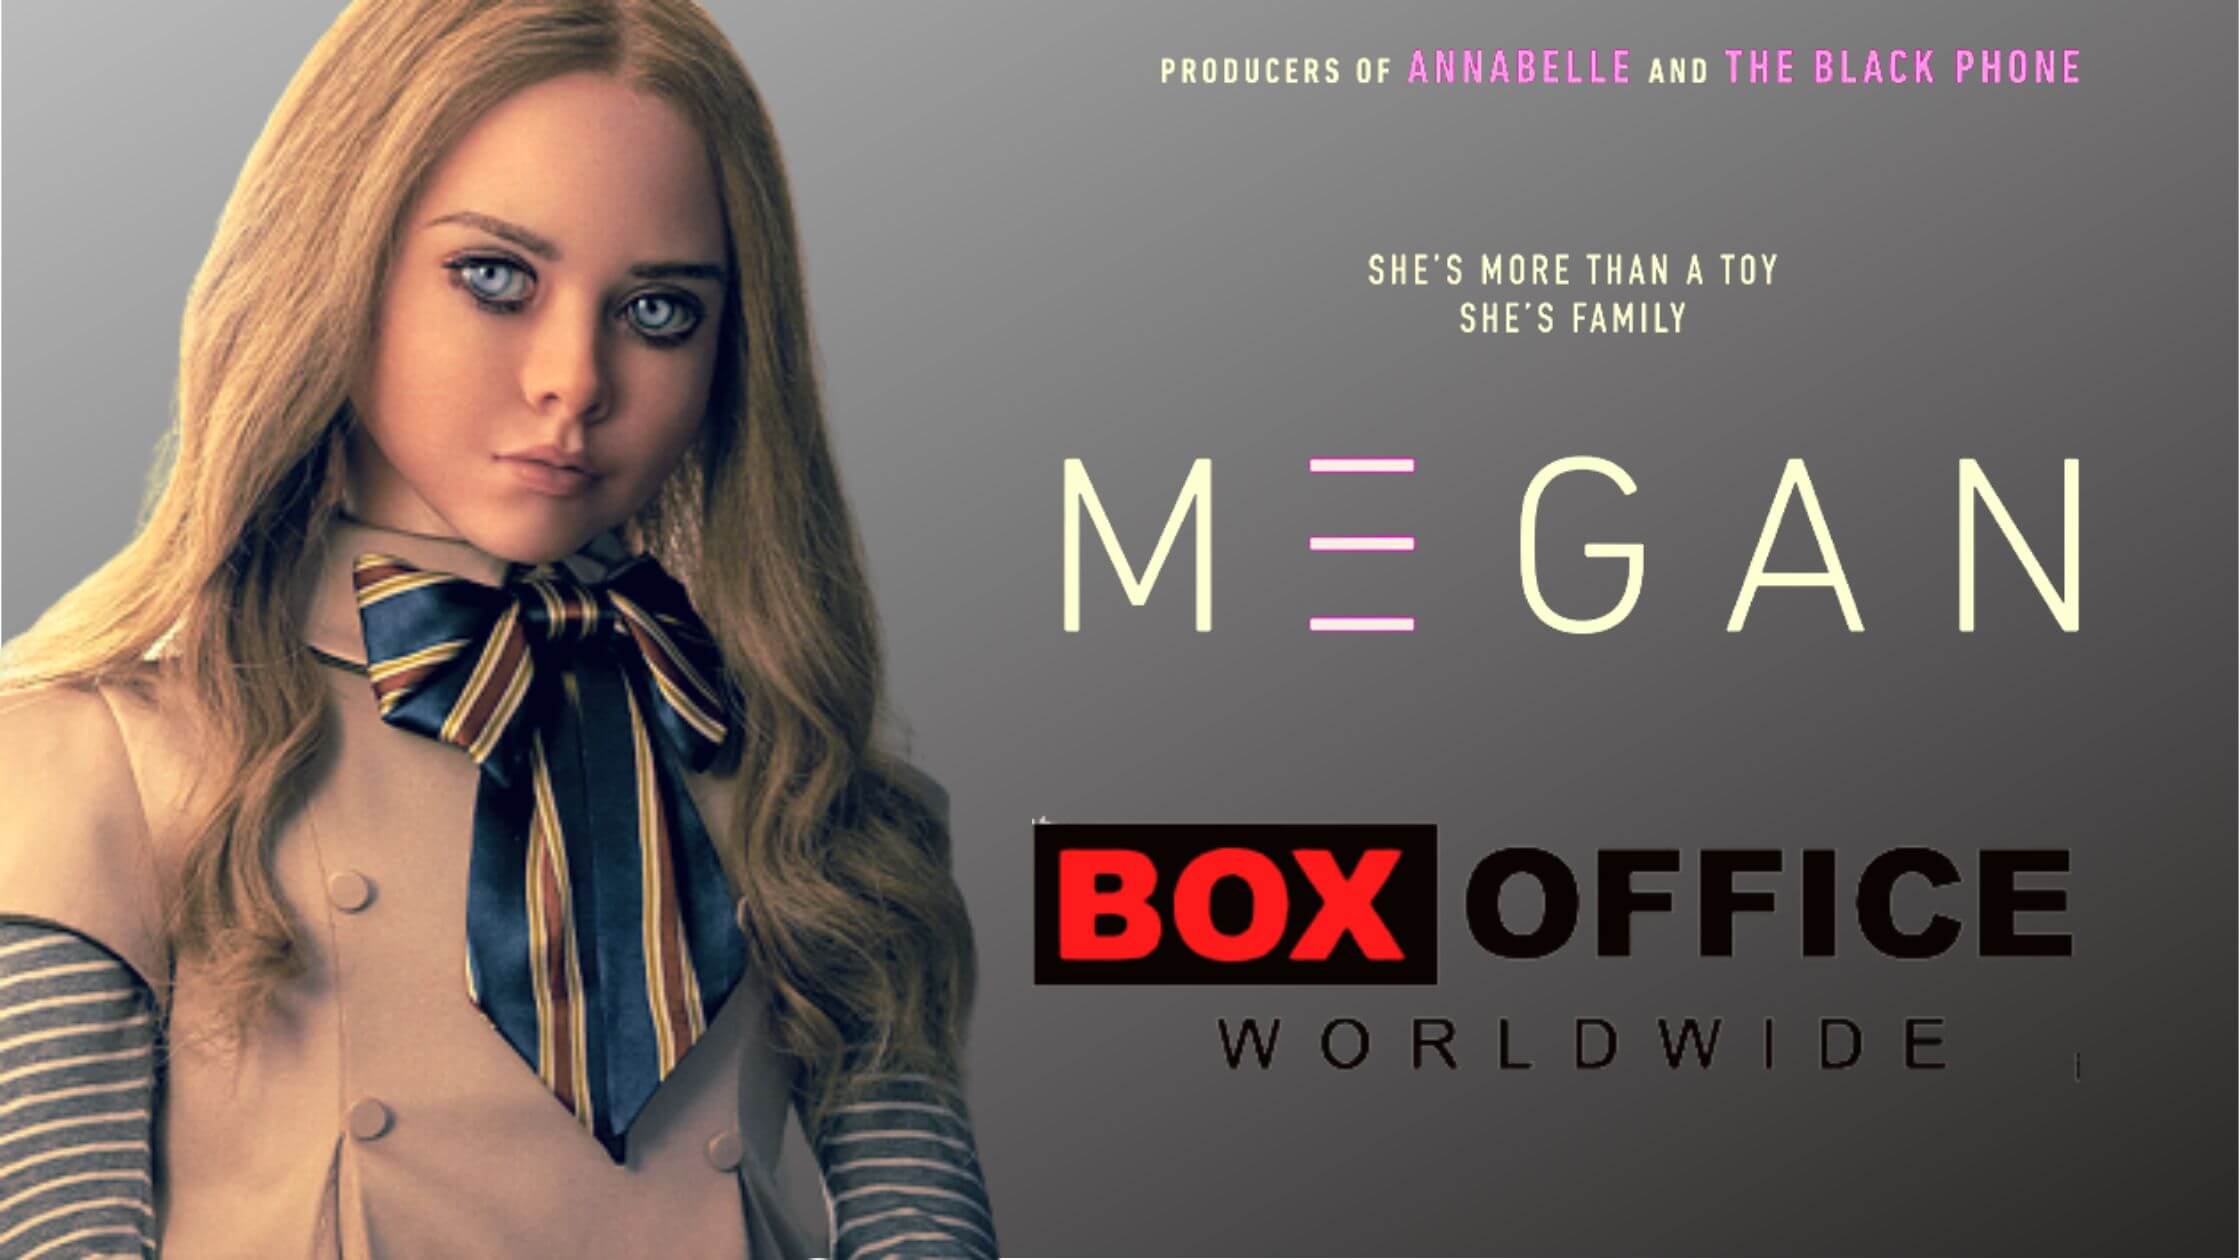 M3GAN Devastates The World Box Office With $45 Million